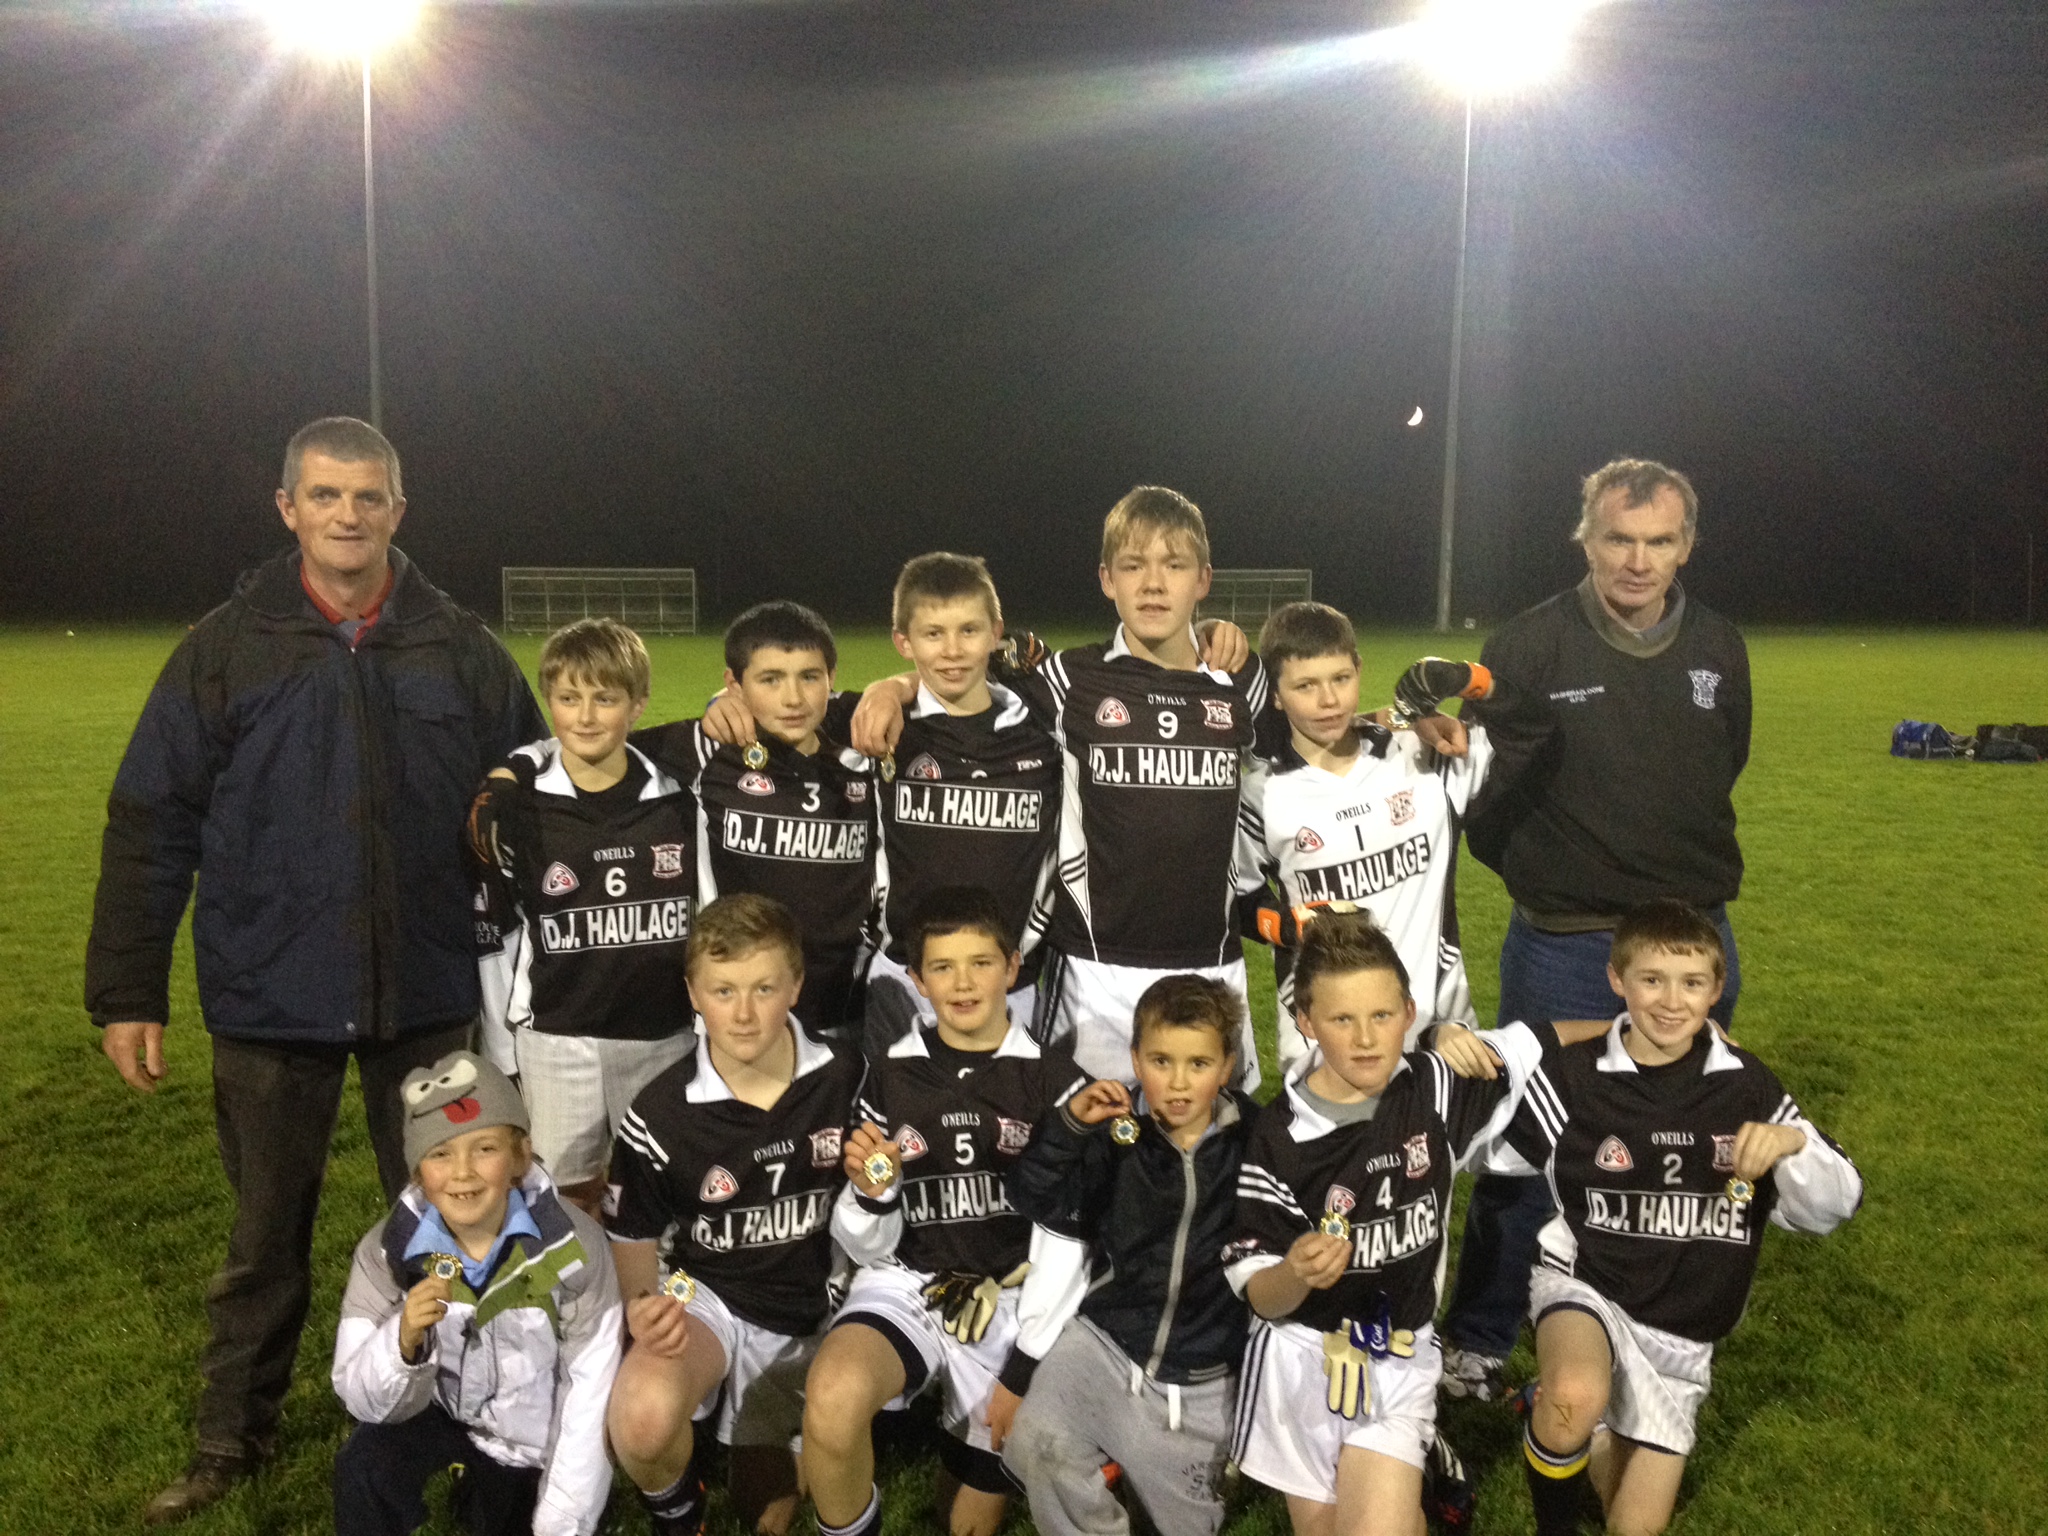 U13 Football 7-a-side  Floodlight Blitz held in Cloghan